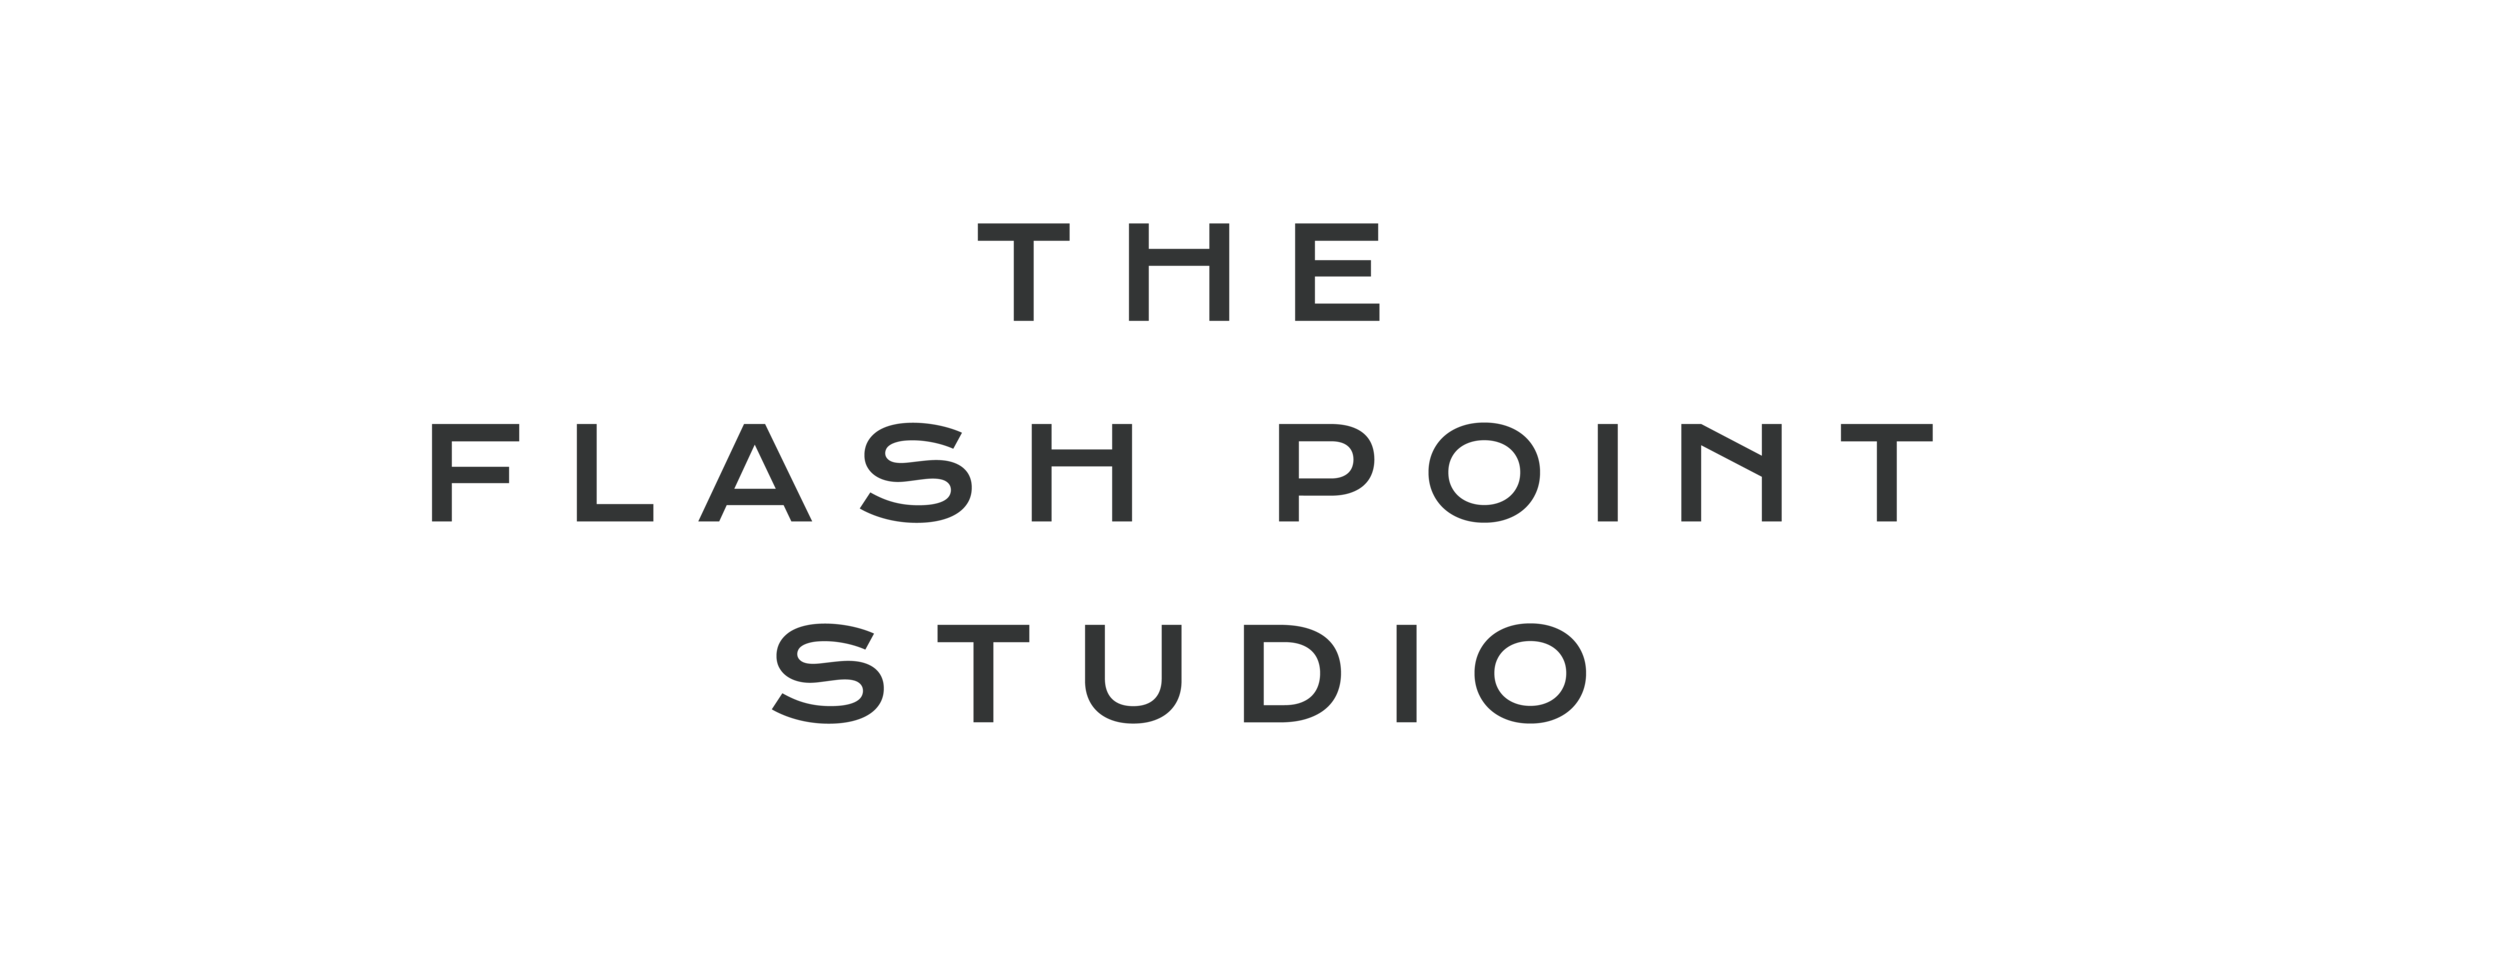 The Flash Point Studio